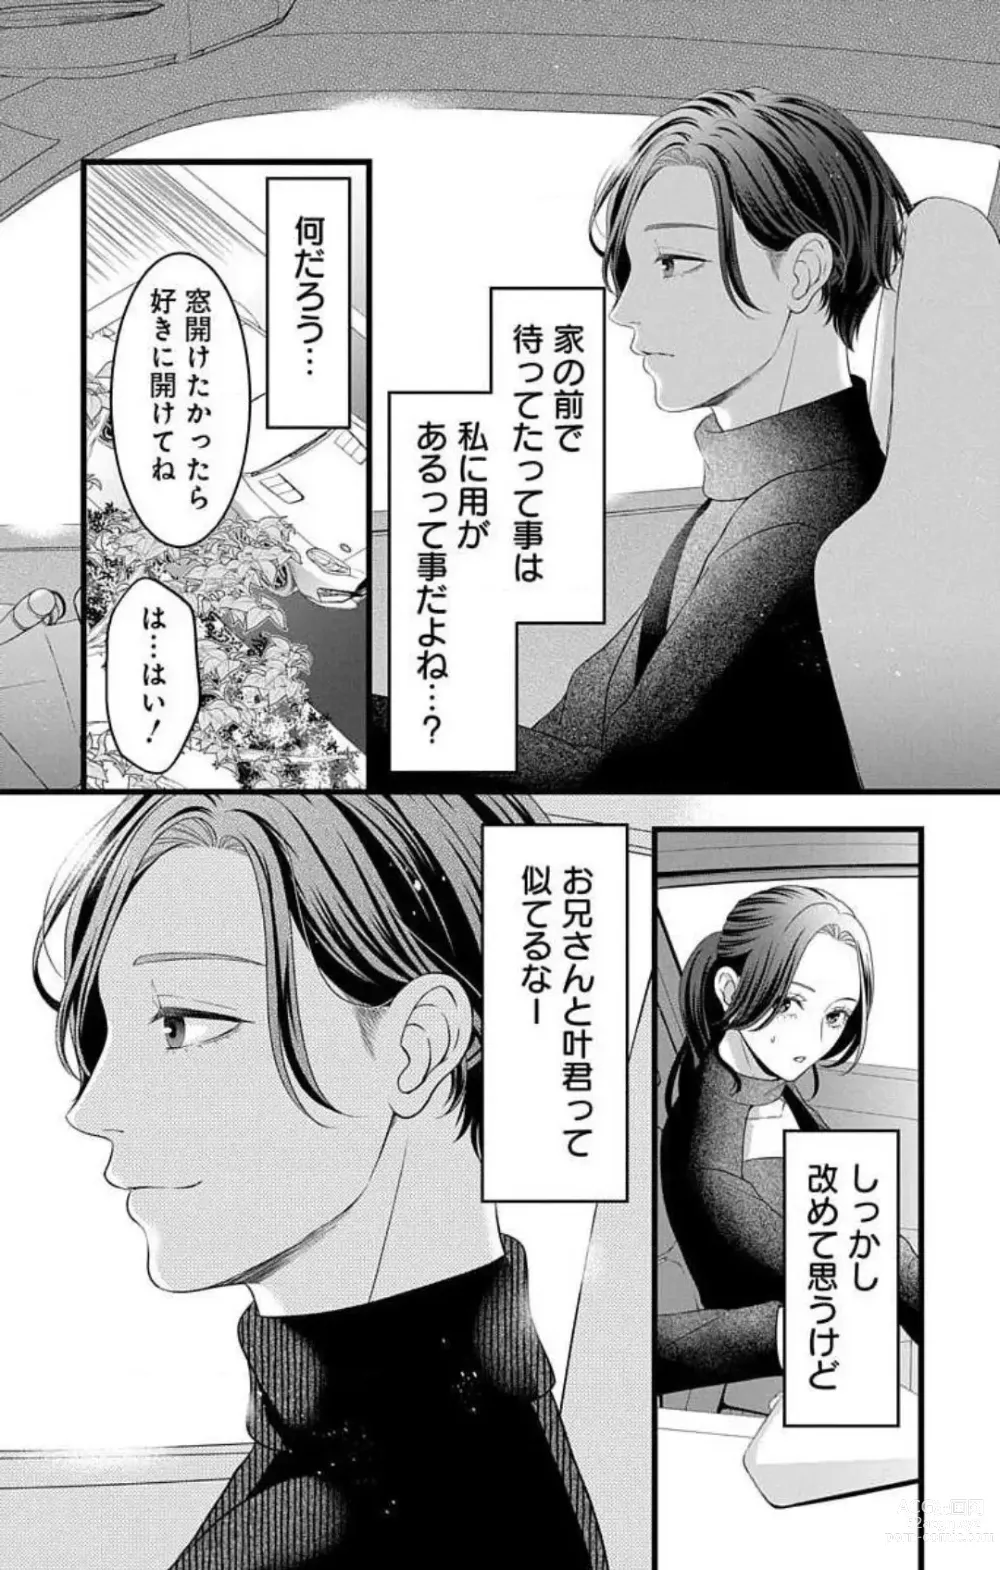 Page 255 of manga Mousou Shoujo 21-27